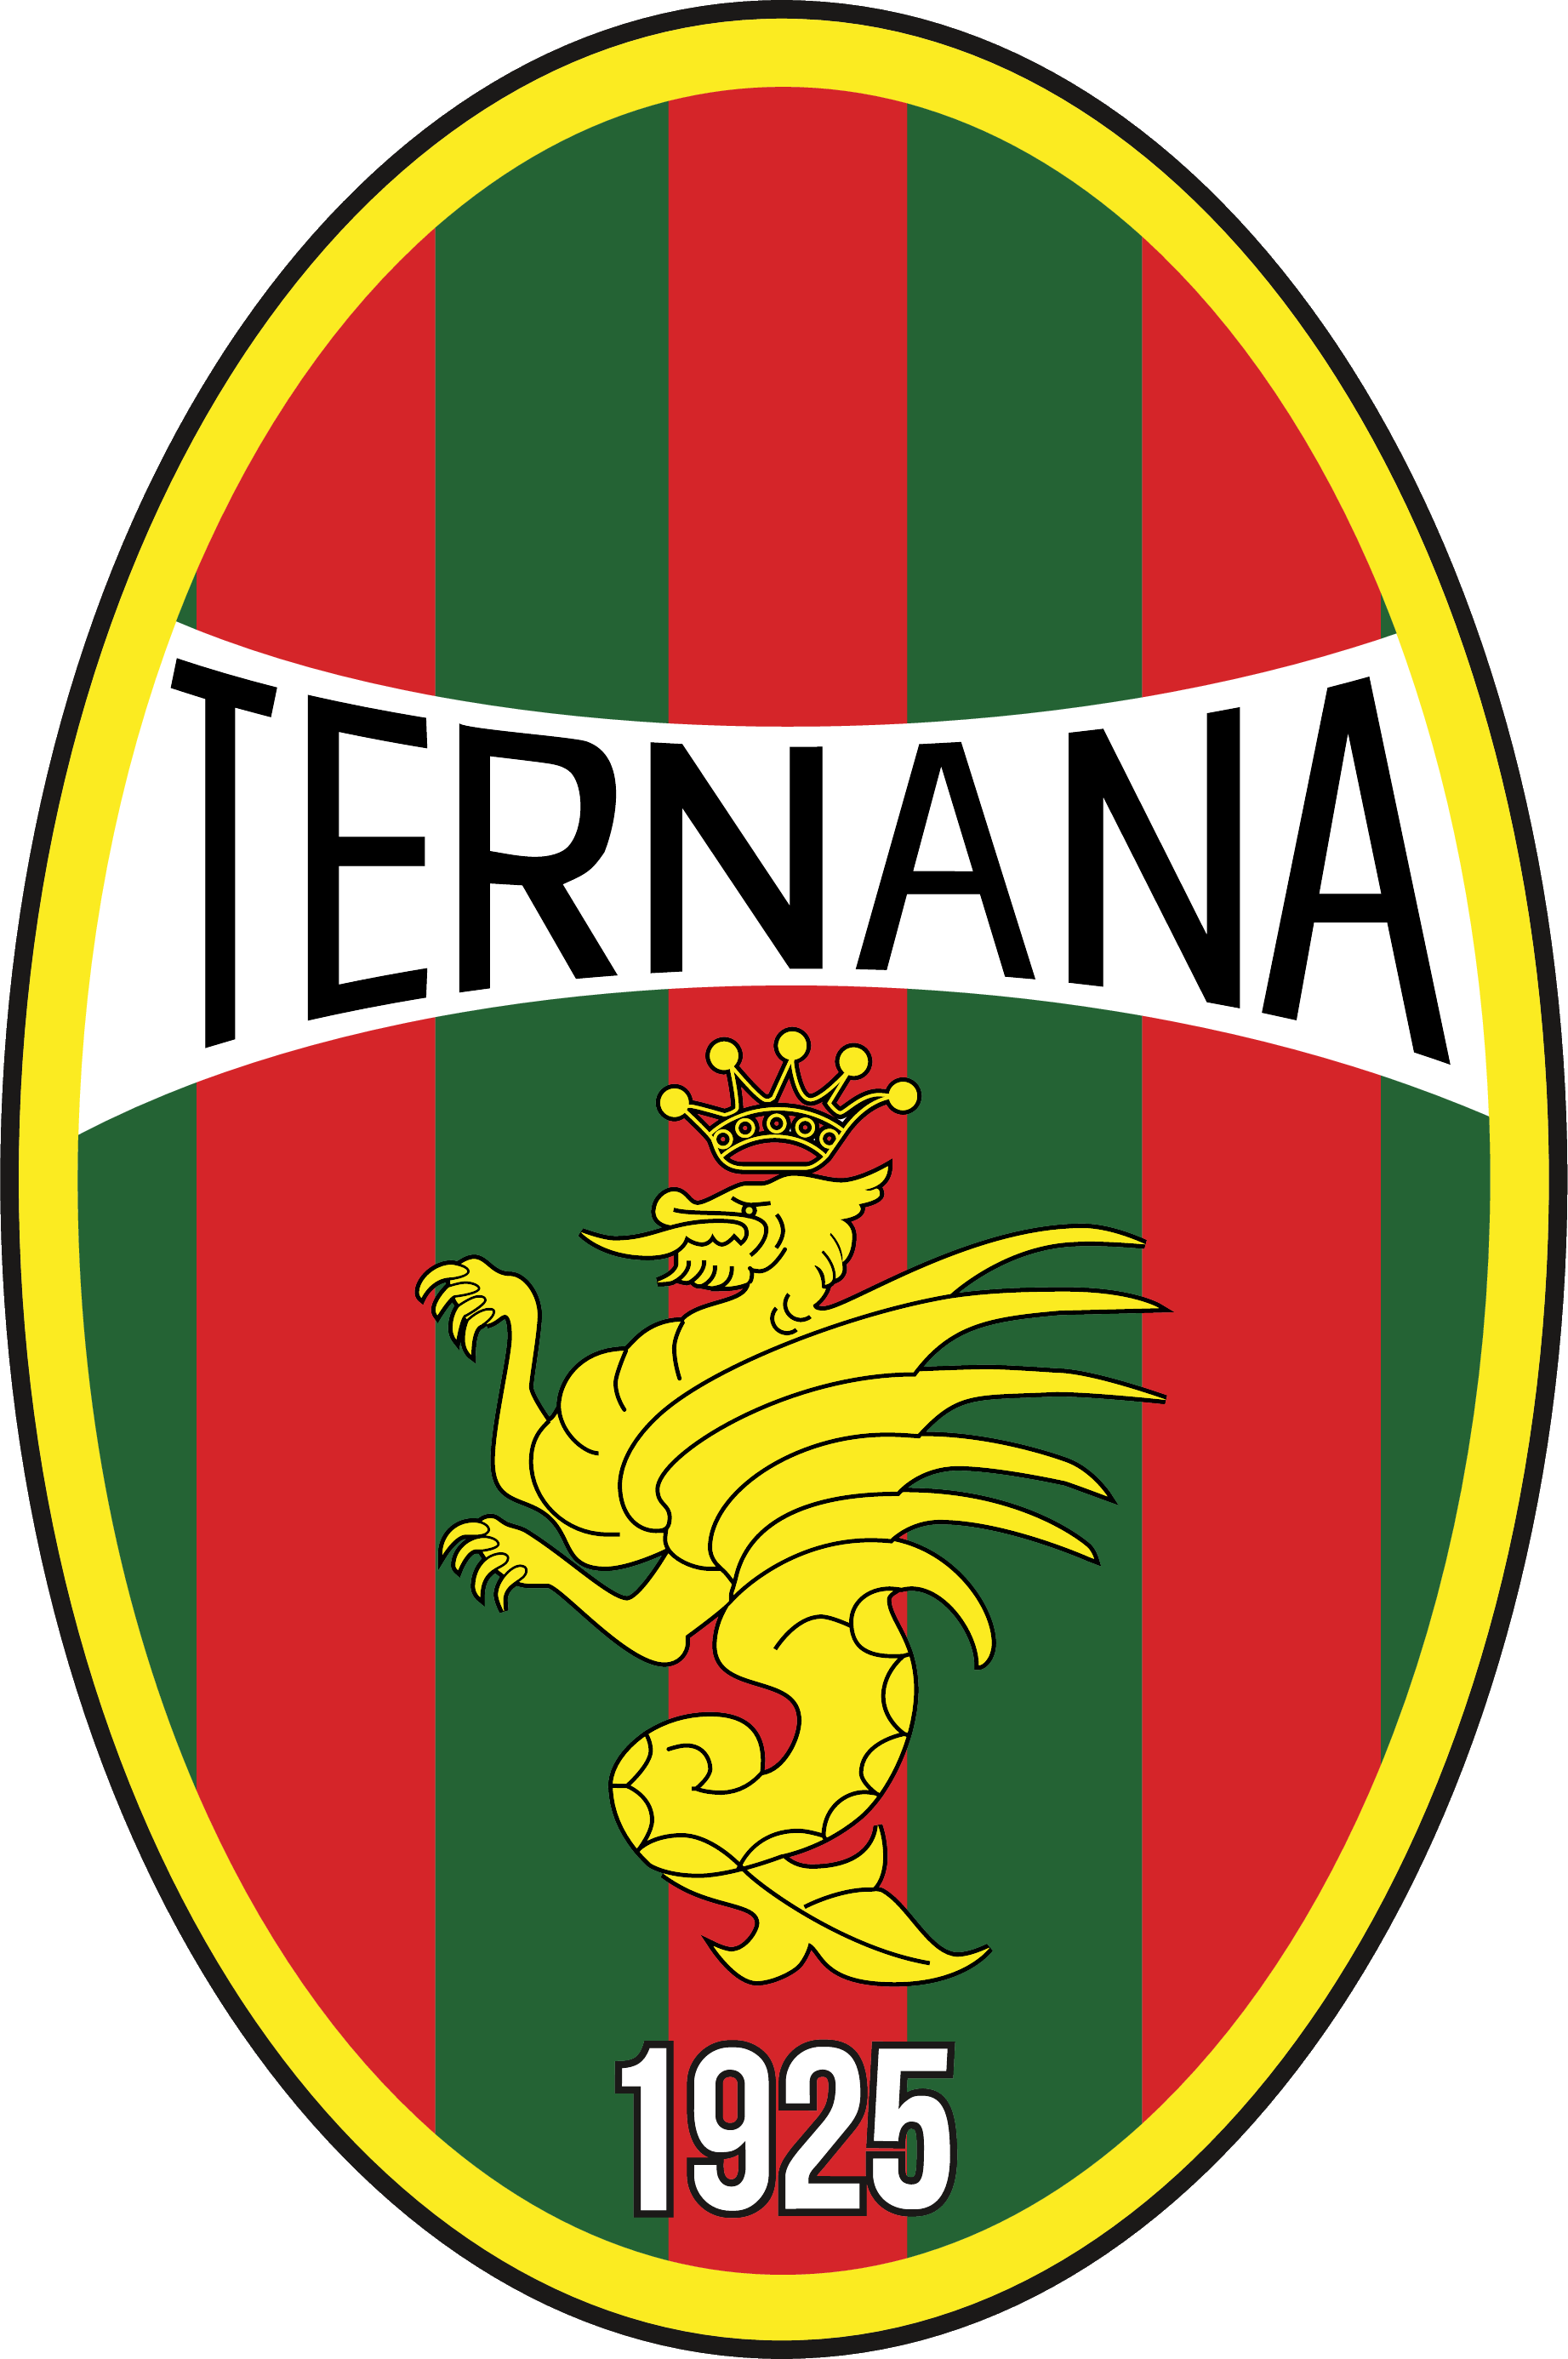 Ternana Calcio - Wikipedia